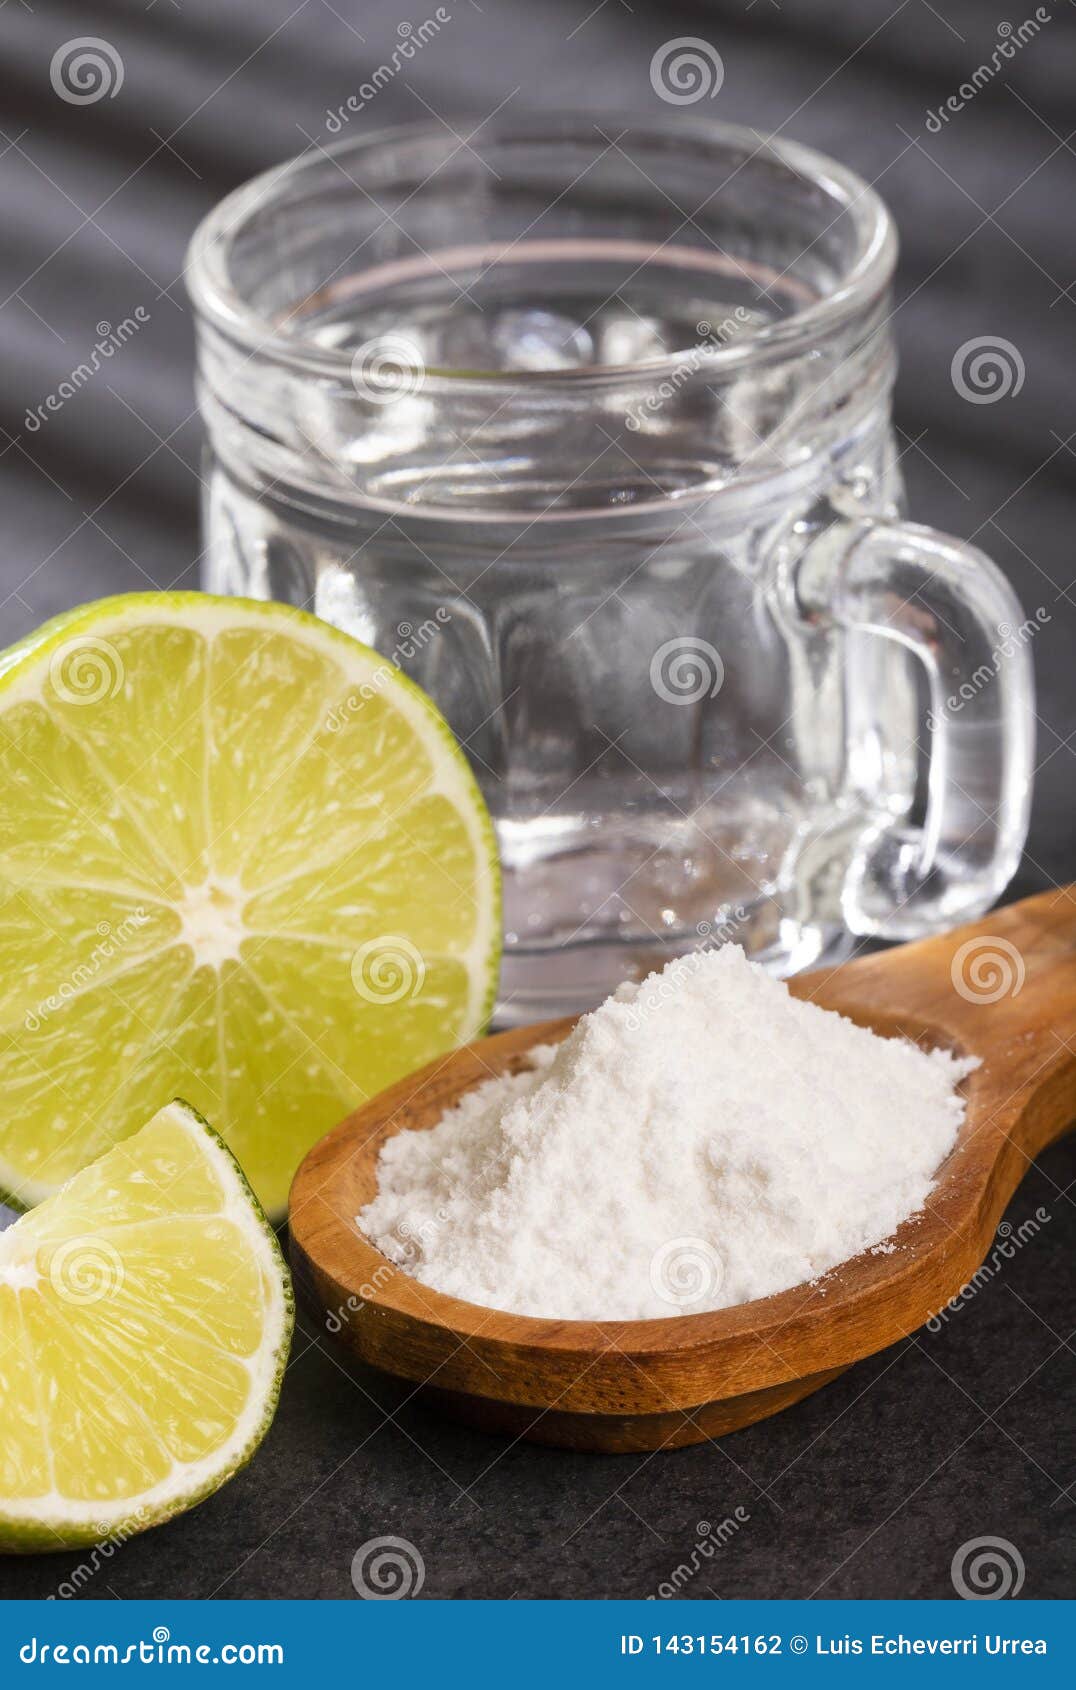 Лимон вода корица сода. Сода и лимон. Содовая с лимоном. Сода с лимоном и водой. Сода лимонный сок и вода.